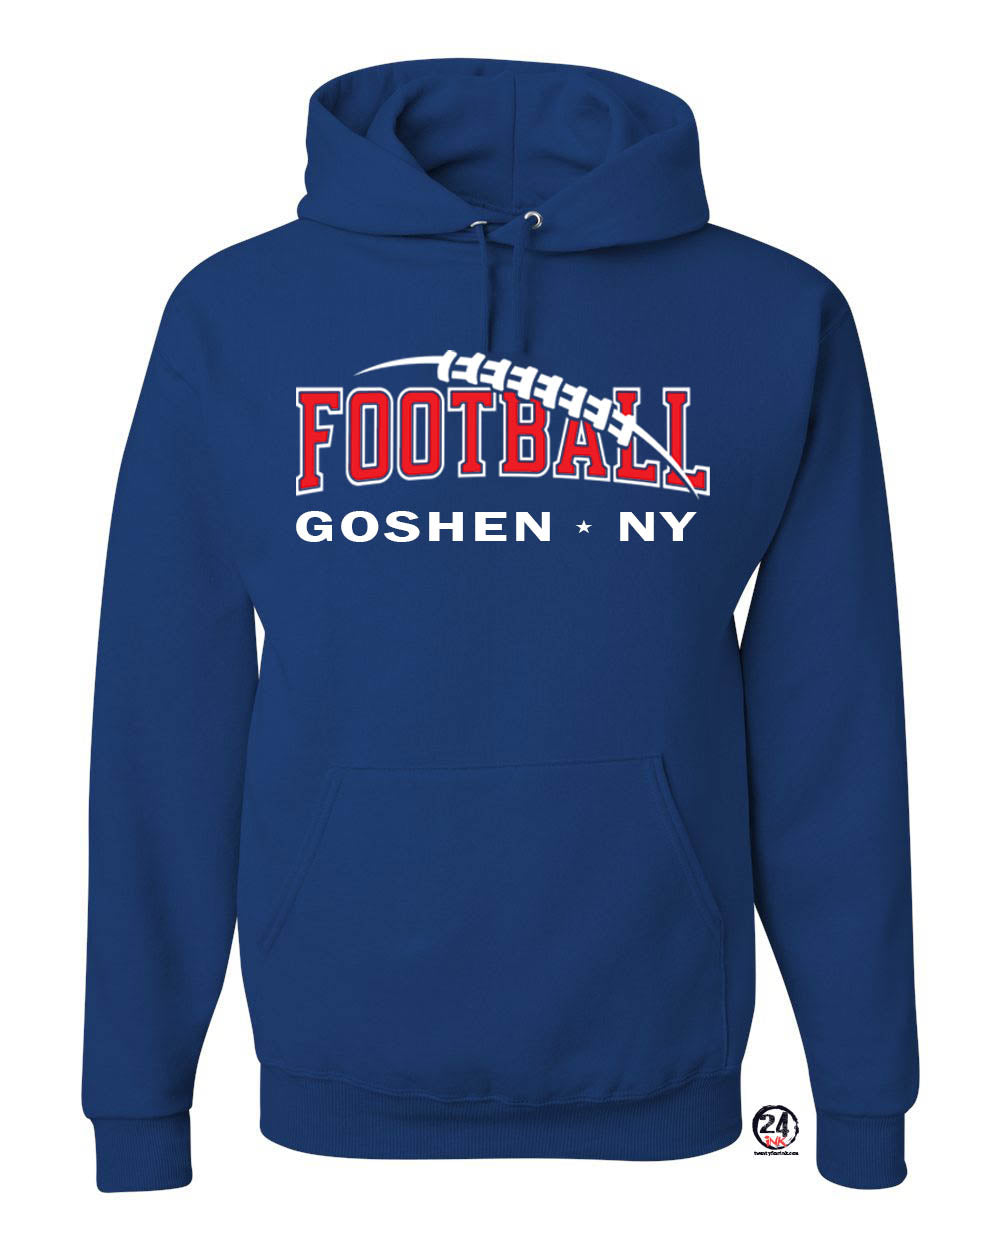 Goshen Football Design 2 Hooded Sweatshirt